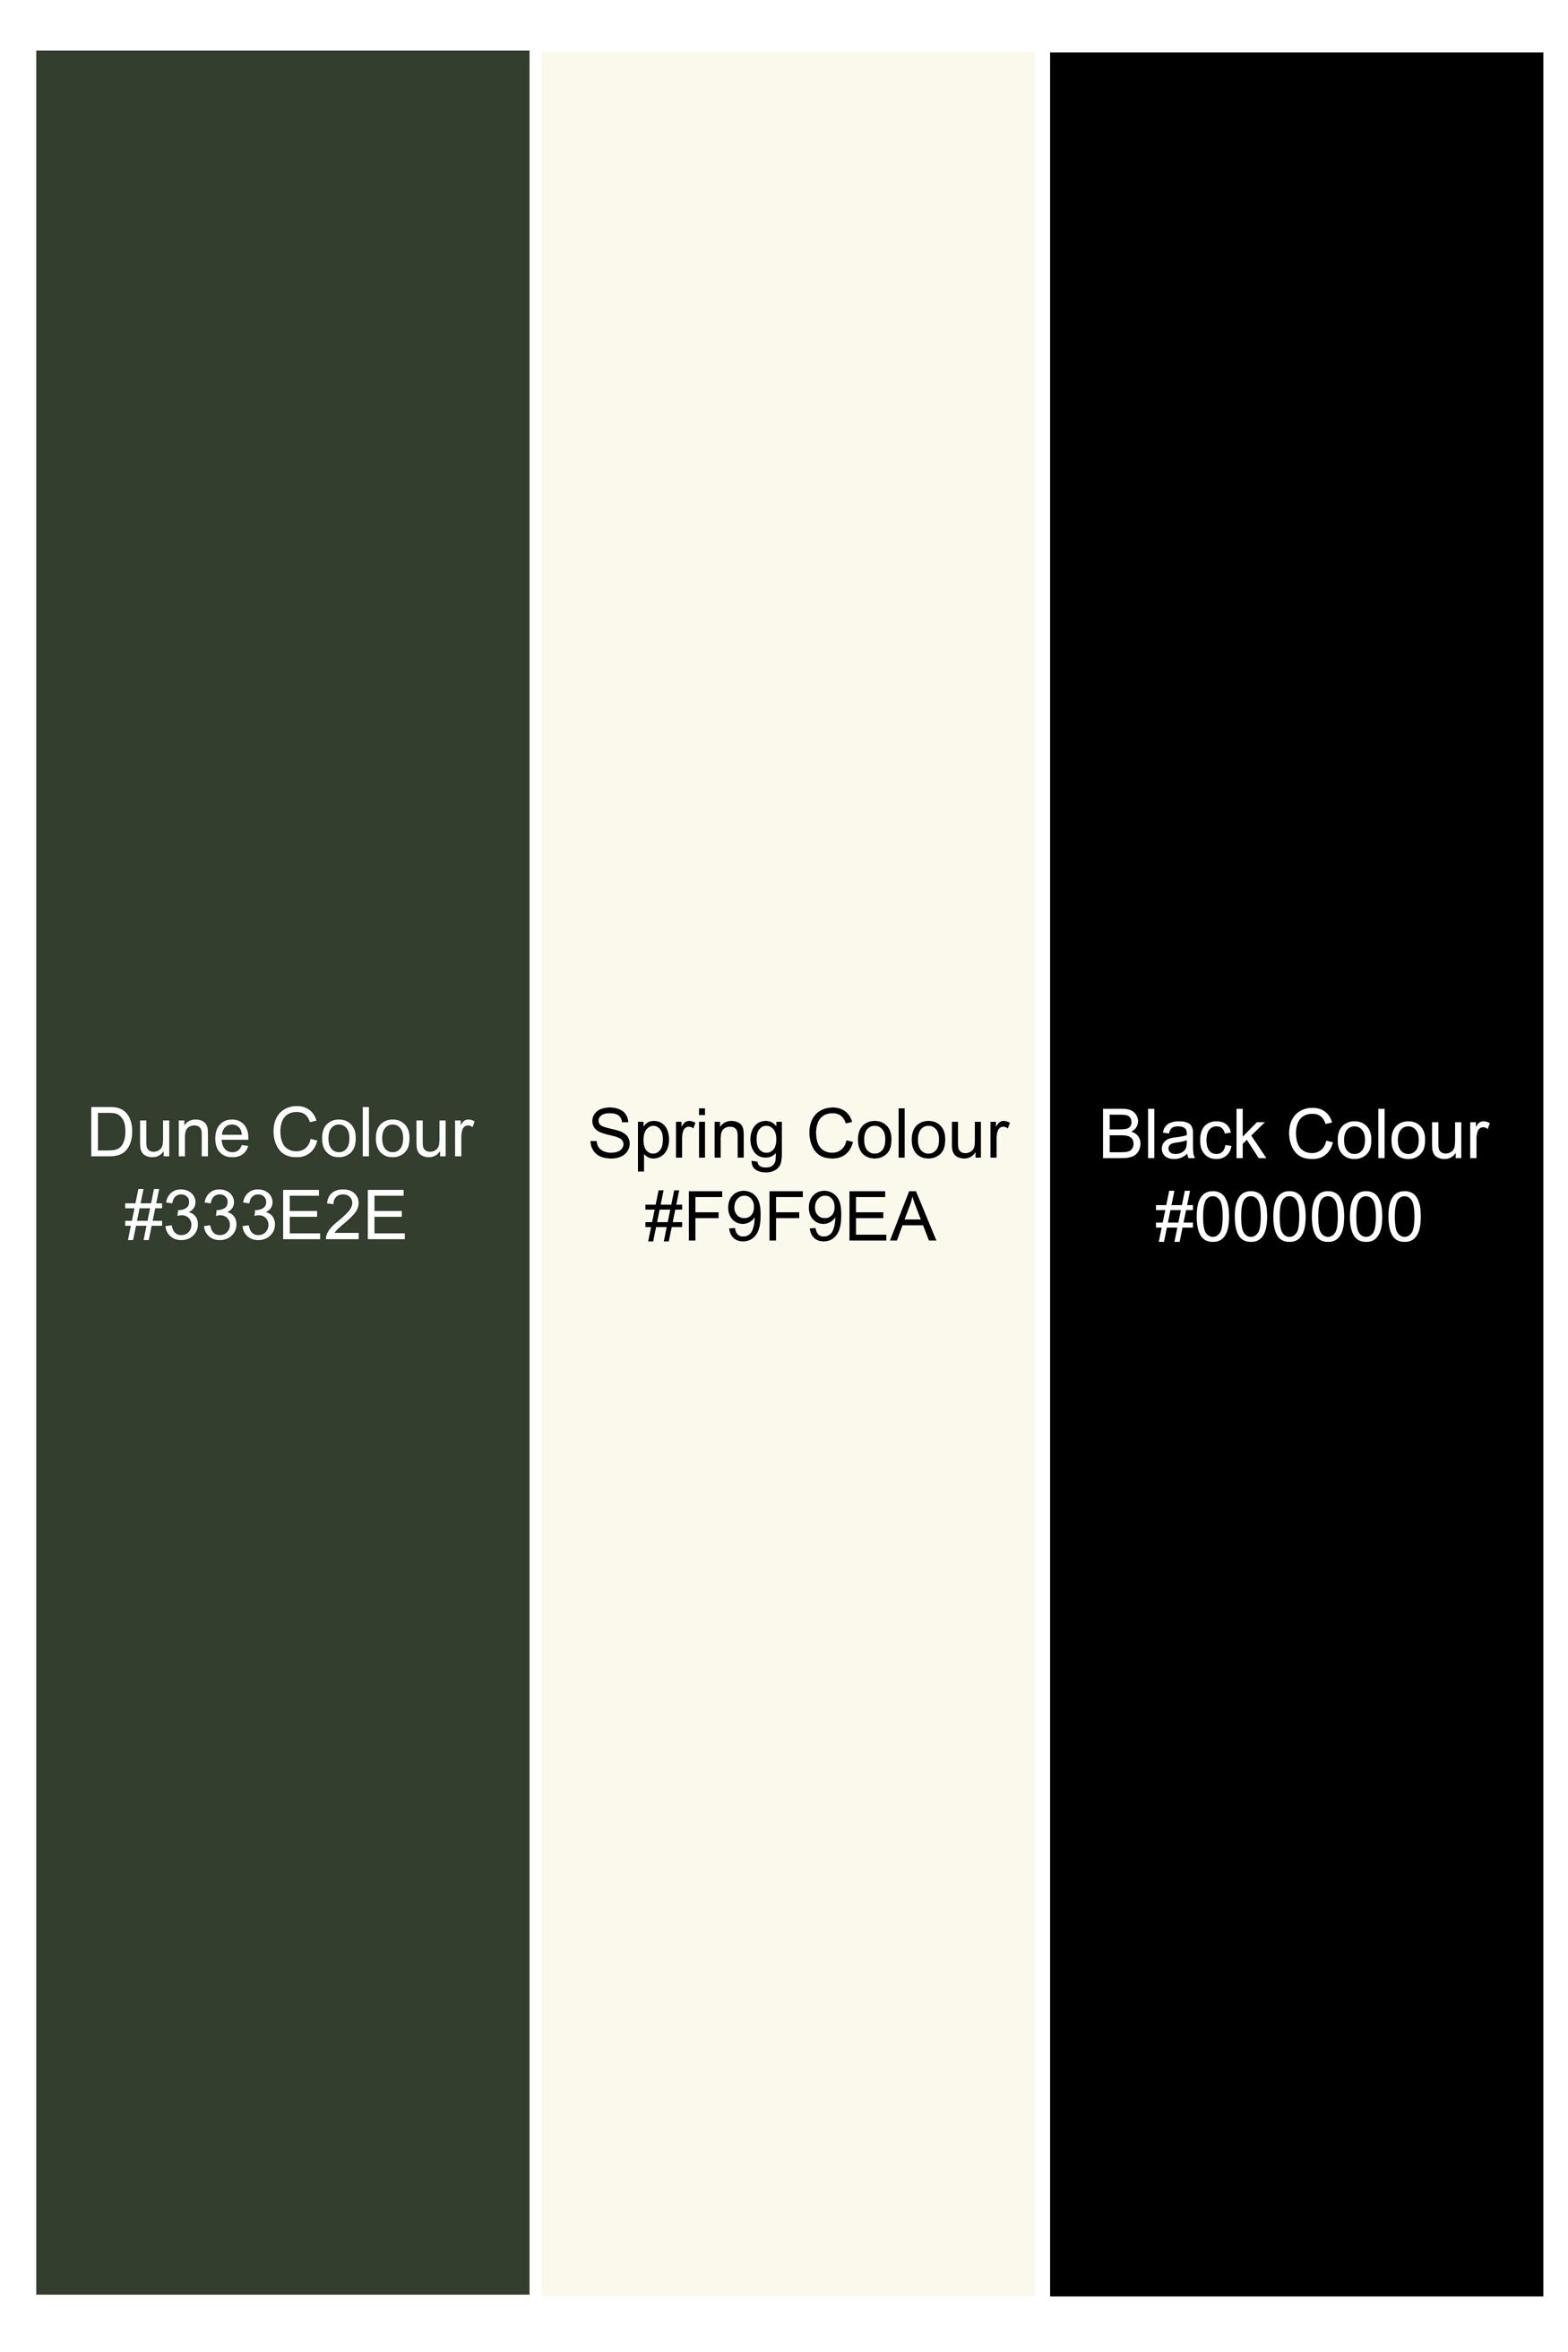 Dune Green and Spring Cream Map Printed Subtle Sheen Super Soft Premium Cotton Designer Shirt 12252-38, 12252-H-38, 12252-39, 12252-H-39, 12252-40, 12252-H-40, 12252-42, 12252-H-42, 12252-44, 12252-H-44, 12252-46, 12252-H-46, 12252-48, 12252-H-48, 12252-50, 12252-H-50, 12252-52, 12252-H-52